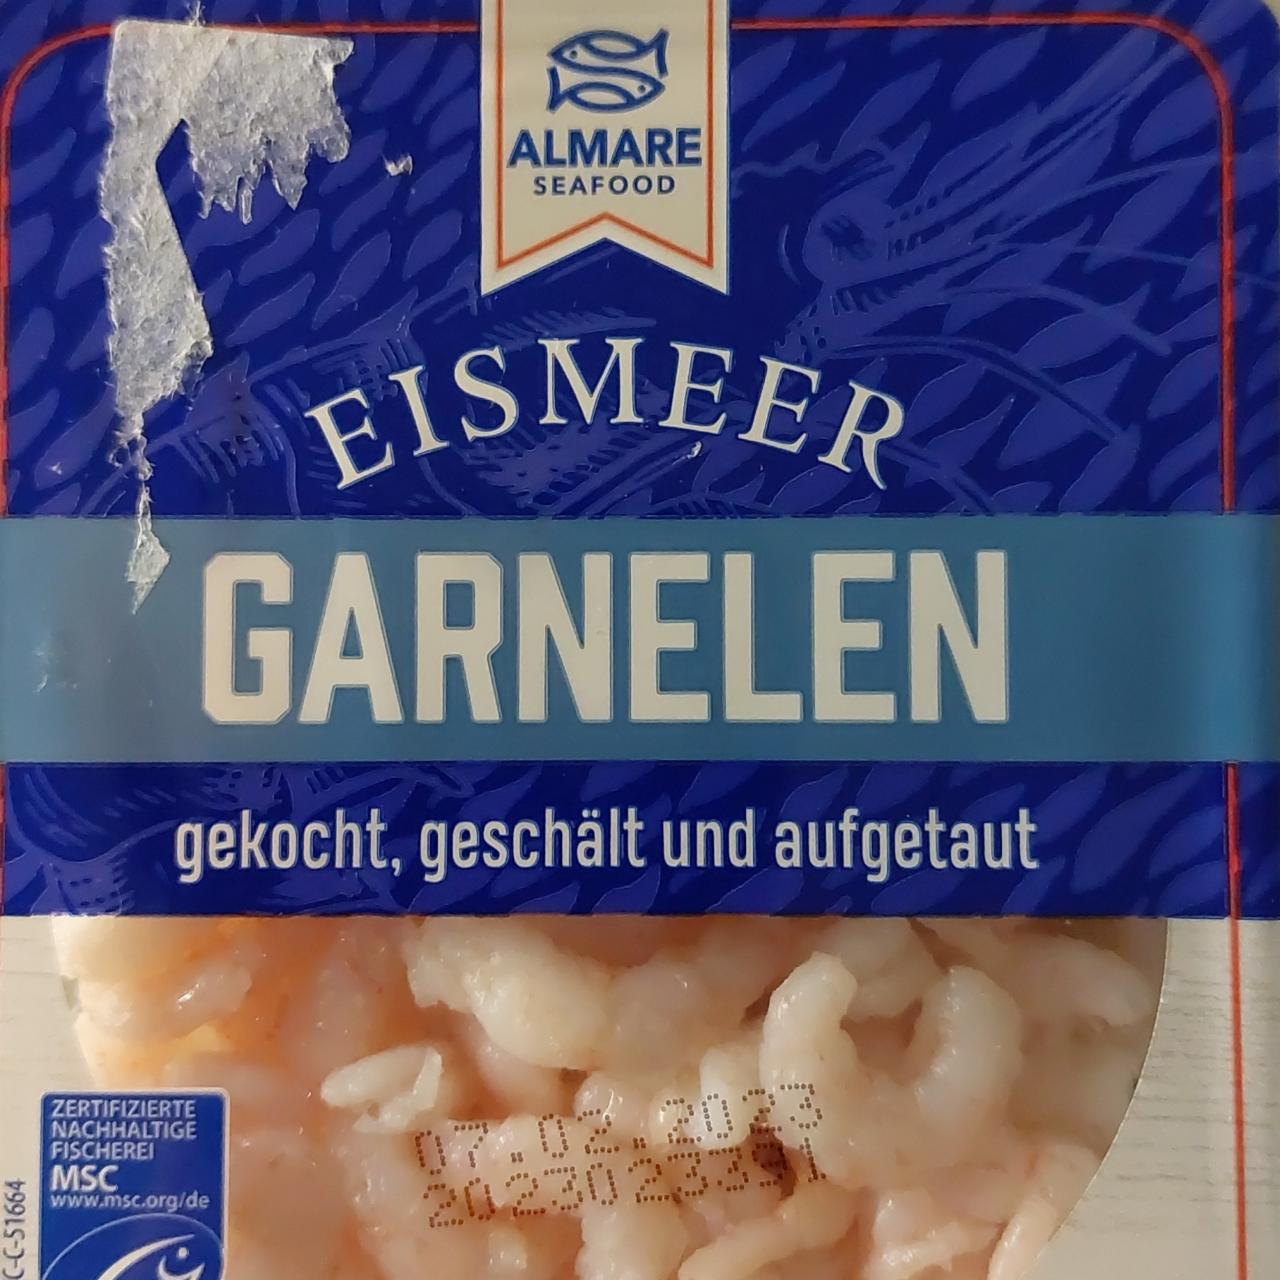 Фото - Креветки Eismeer Garnelen Almare Seafood